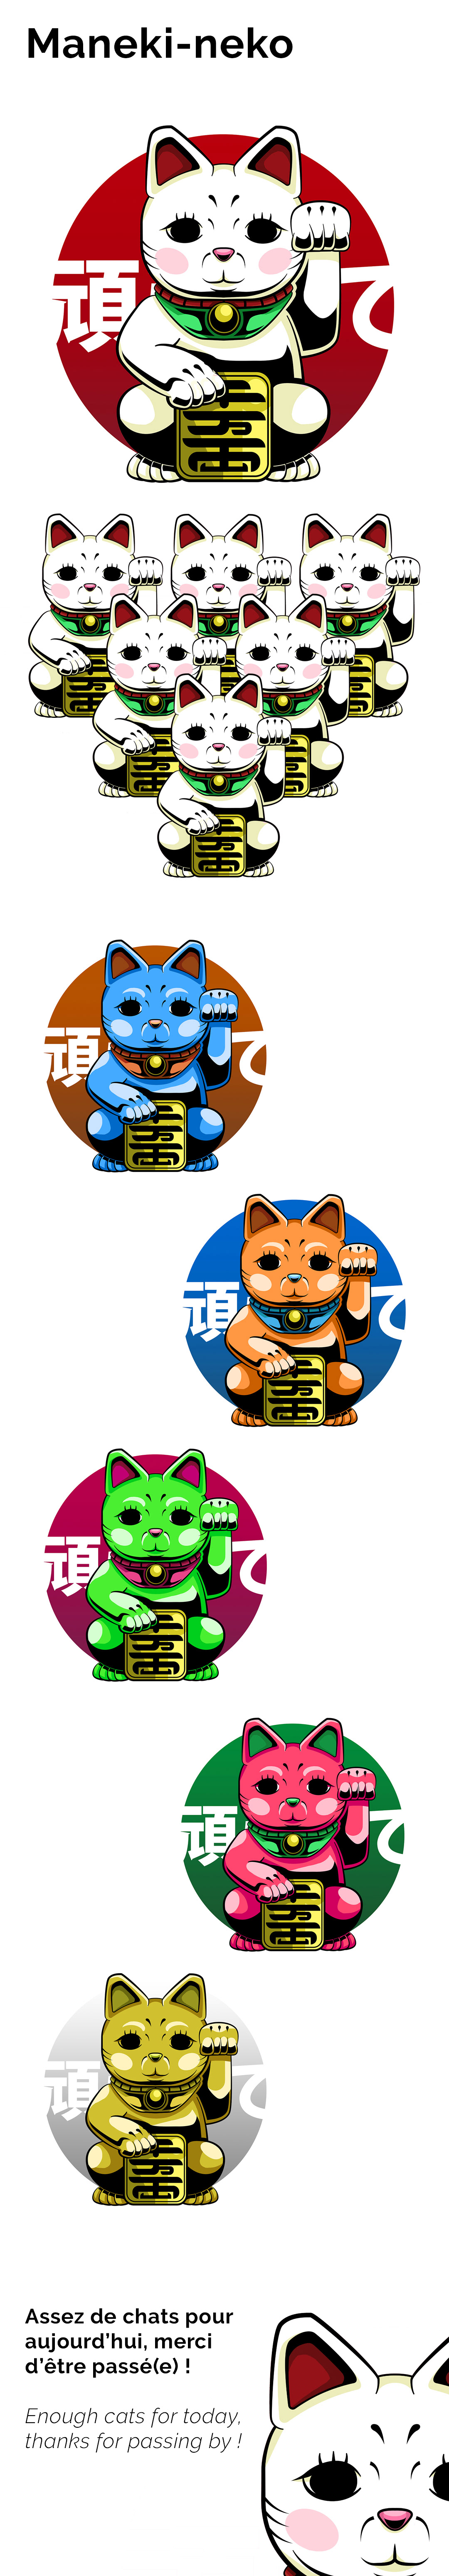 maneki-neko neko ILLUSTRATION  Drawing  design graphicdesign Cat graphism graphic design 